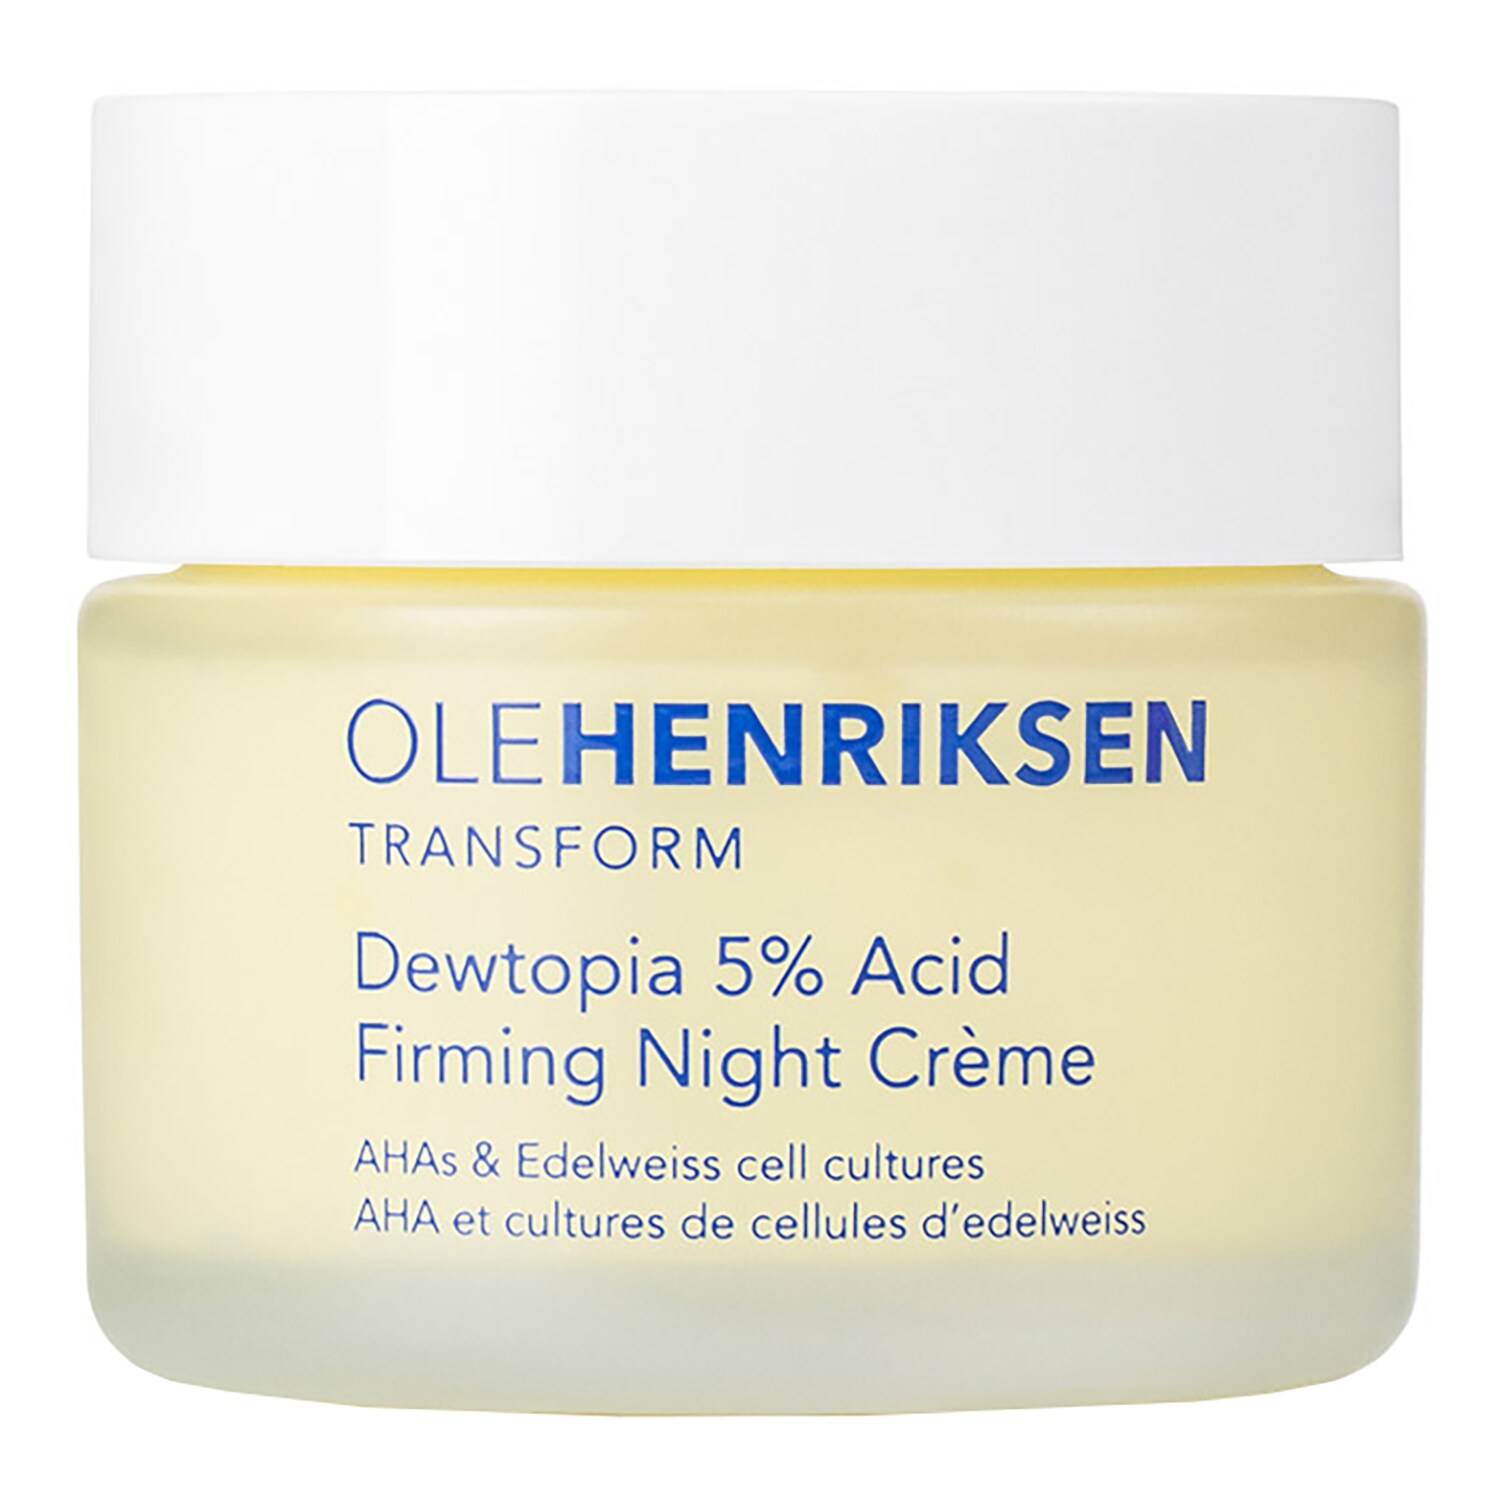 Ole Henriksen Dewtopia 5% Acid Firming Night Creme 50Ml